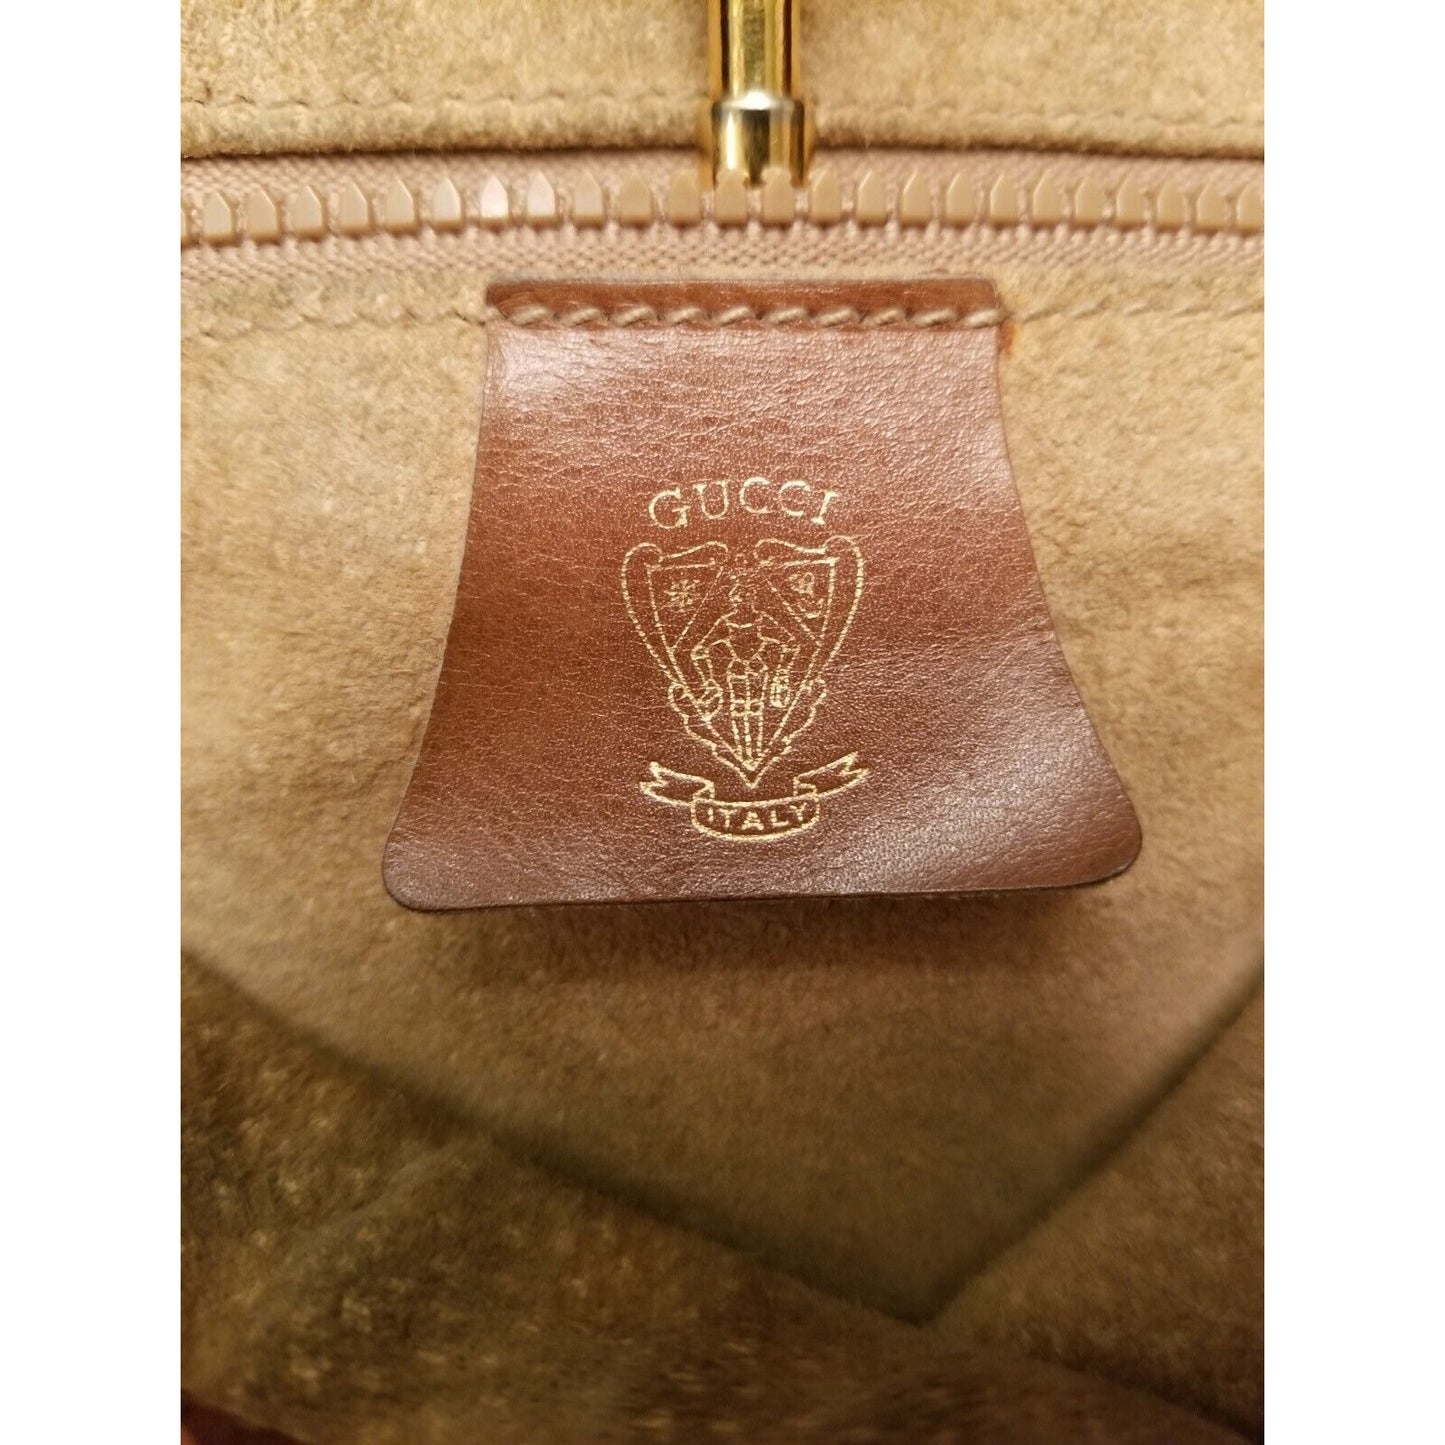 Rare, vintage, Gucci, camel leather 1961 Jackie hobo shoulder bag with a red & green center stripe, gold piston closure, & extender strap